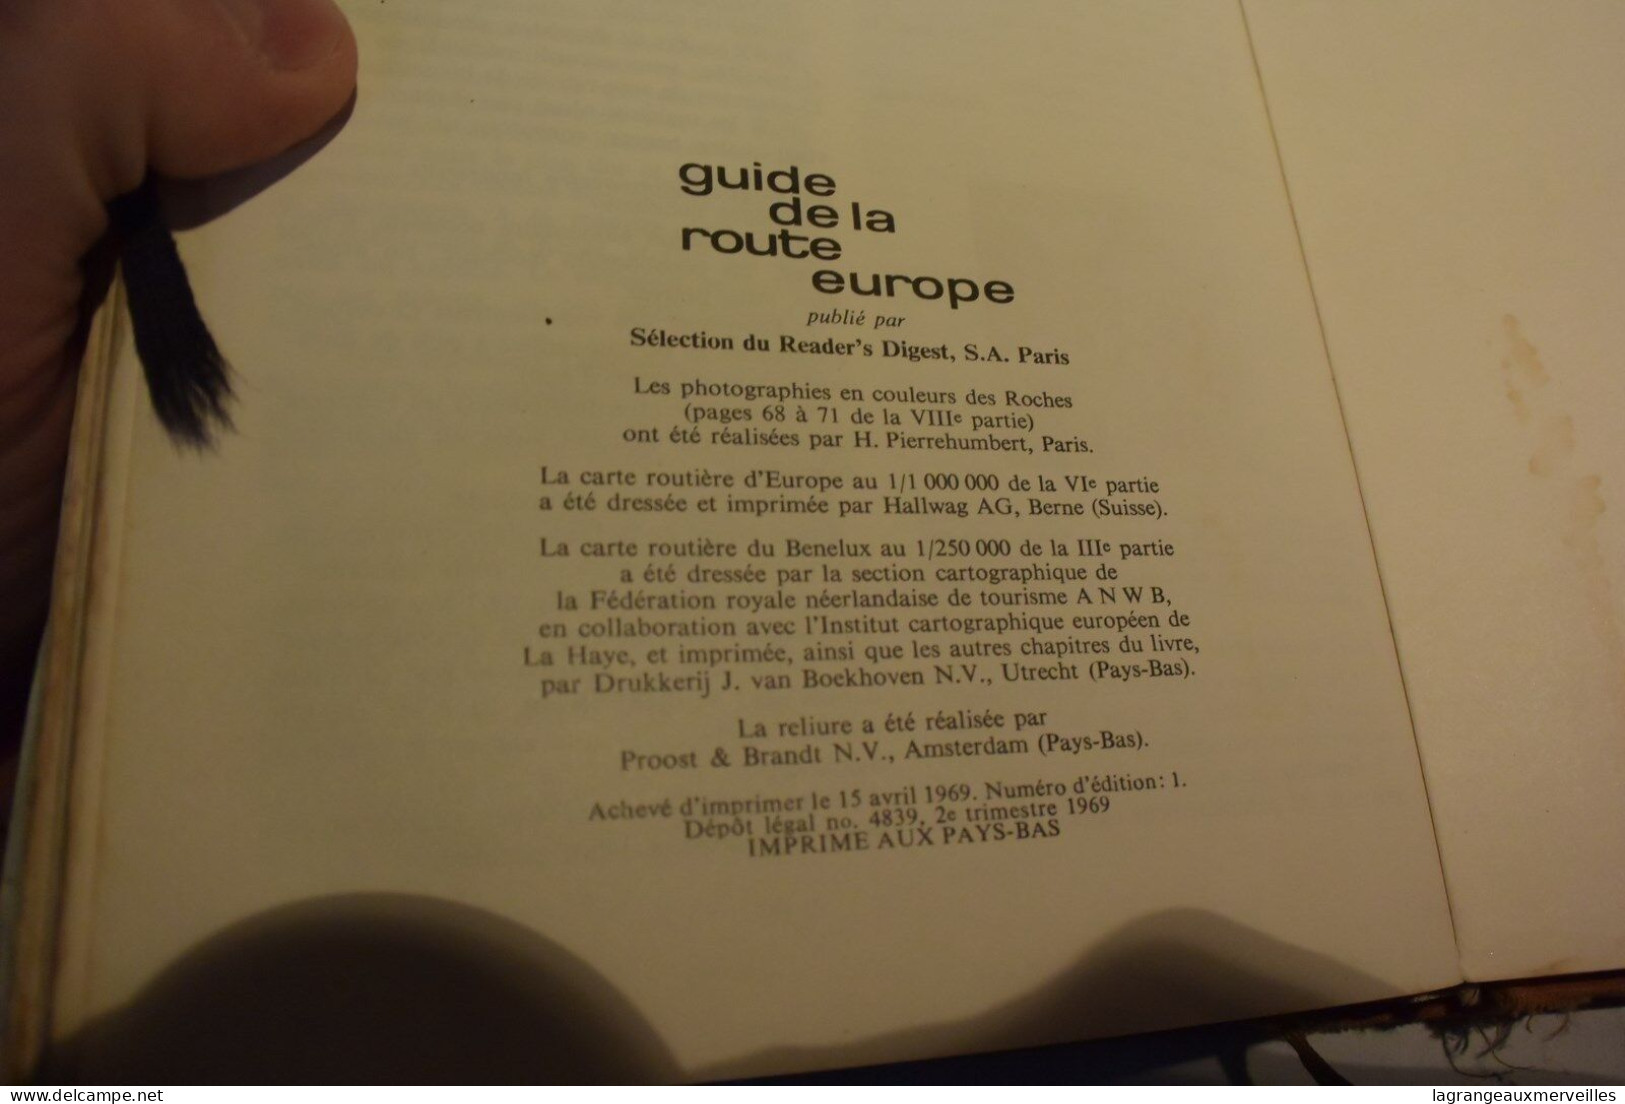 C41 Ancien guide de la route en Europe en 1969